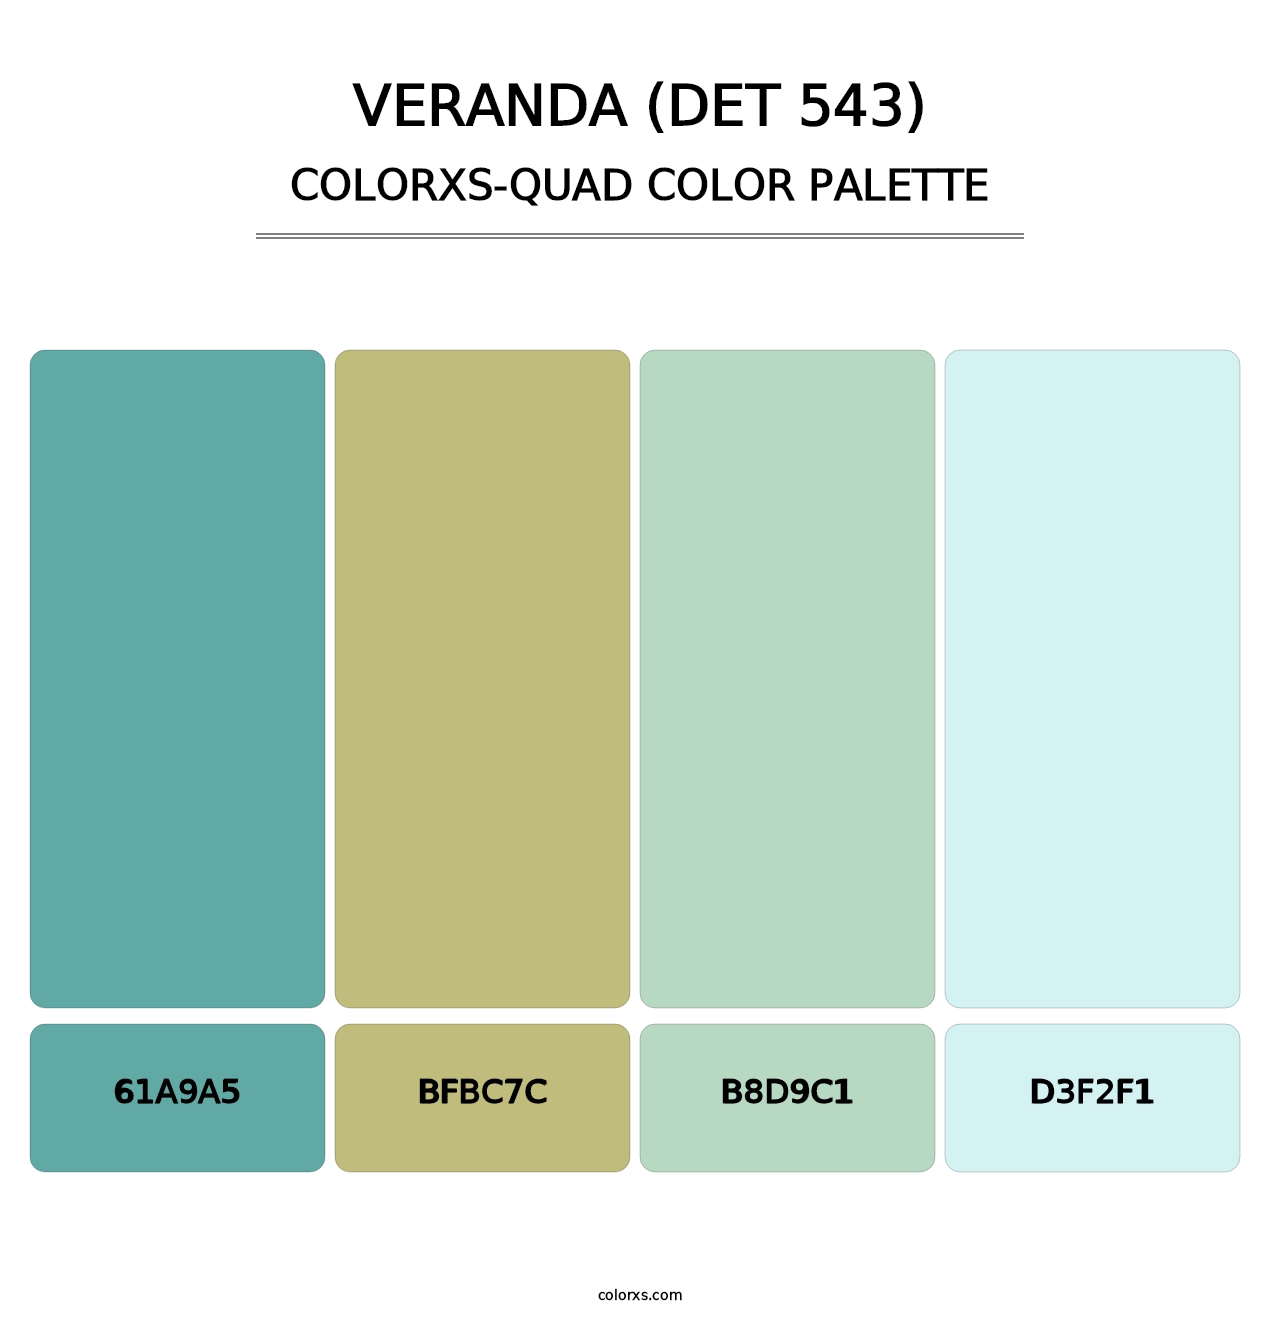 Veranda (DET 543) - Colorxs Quad Palette